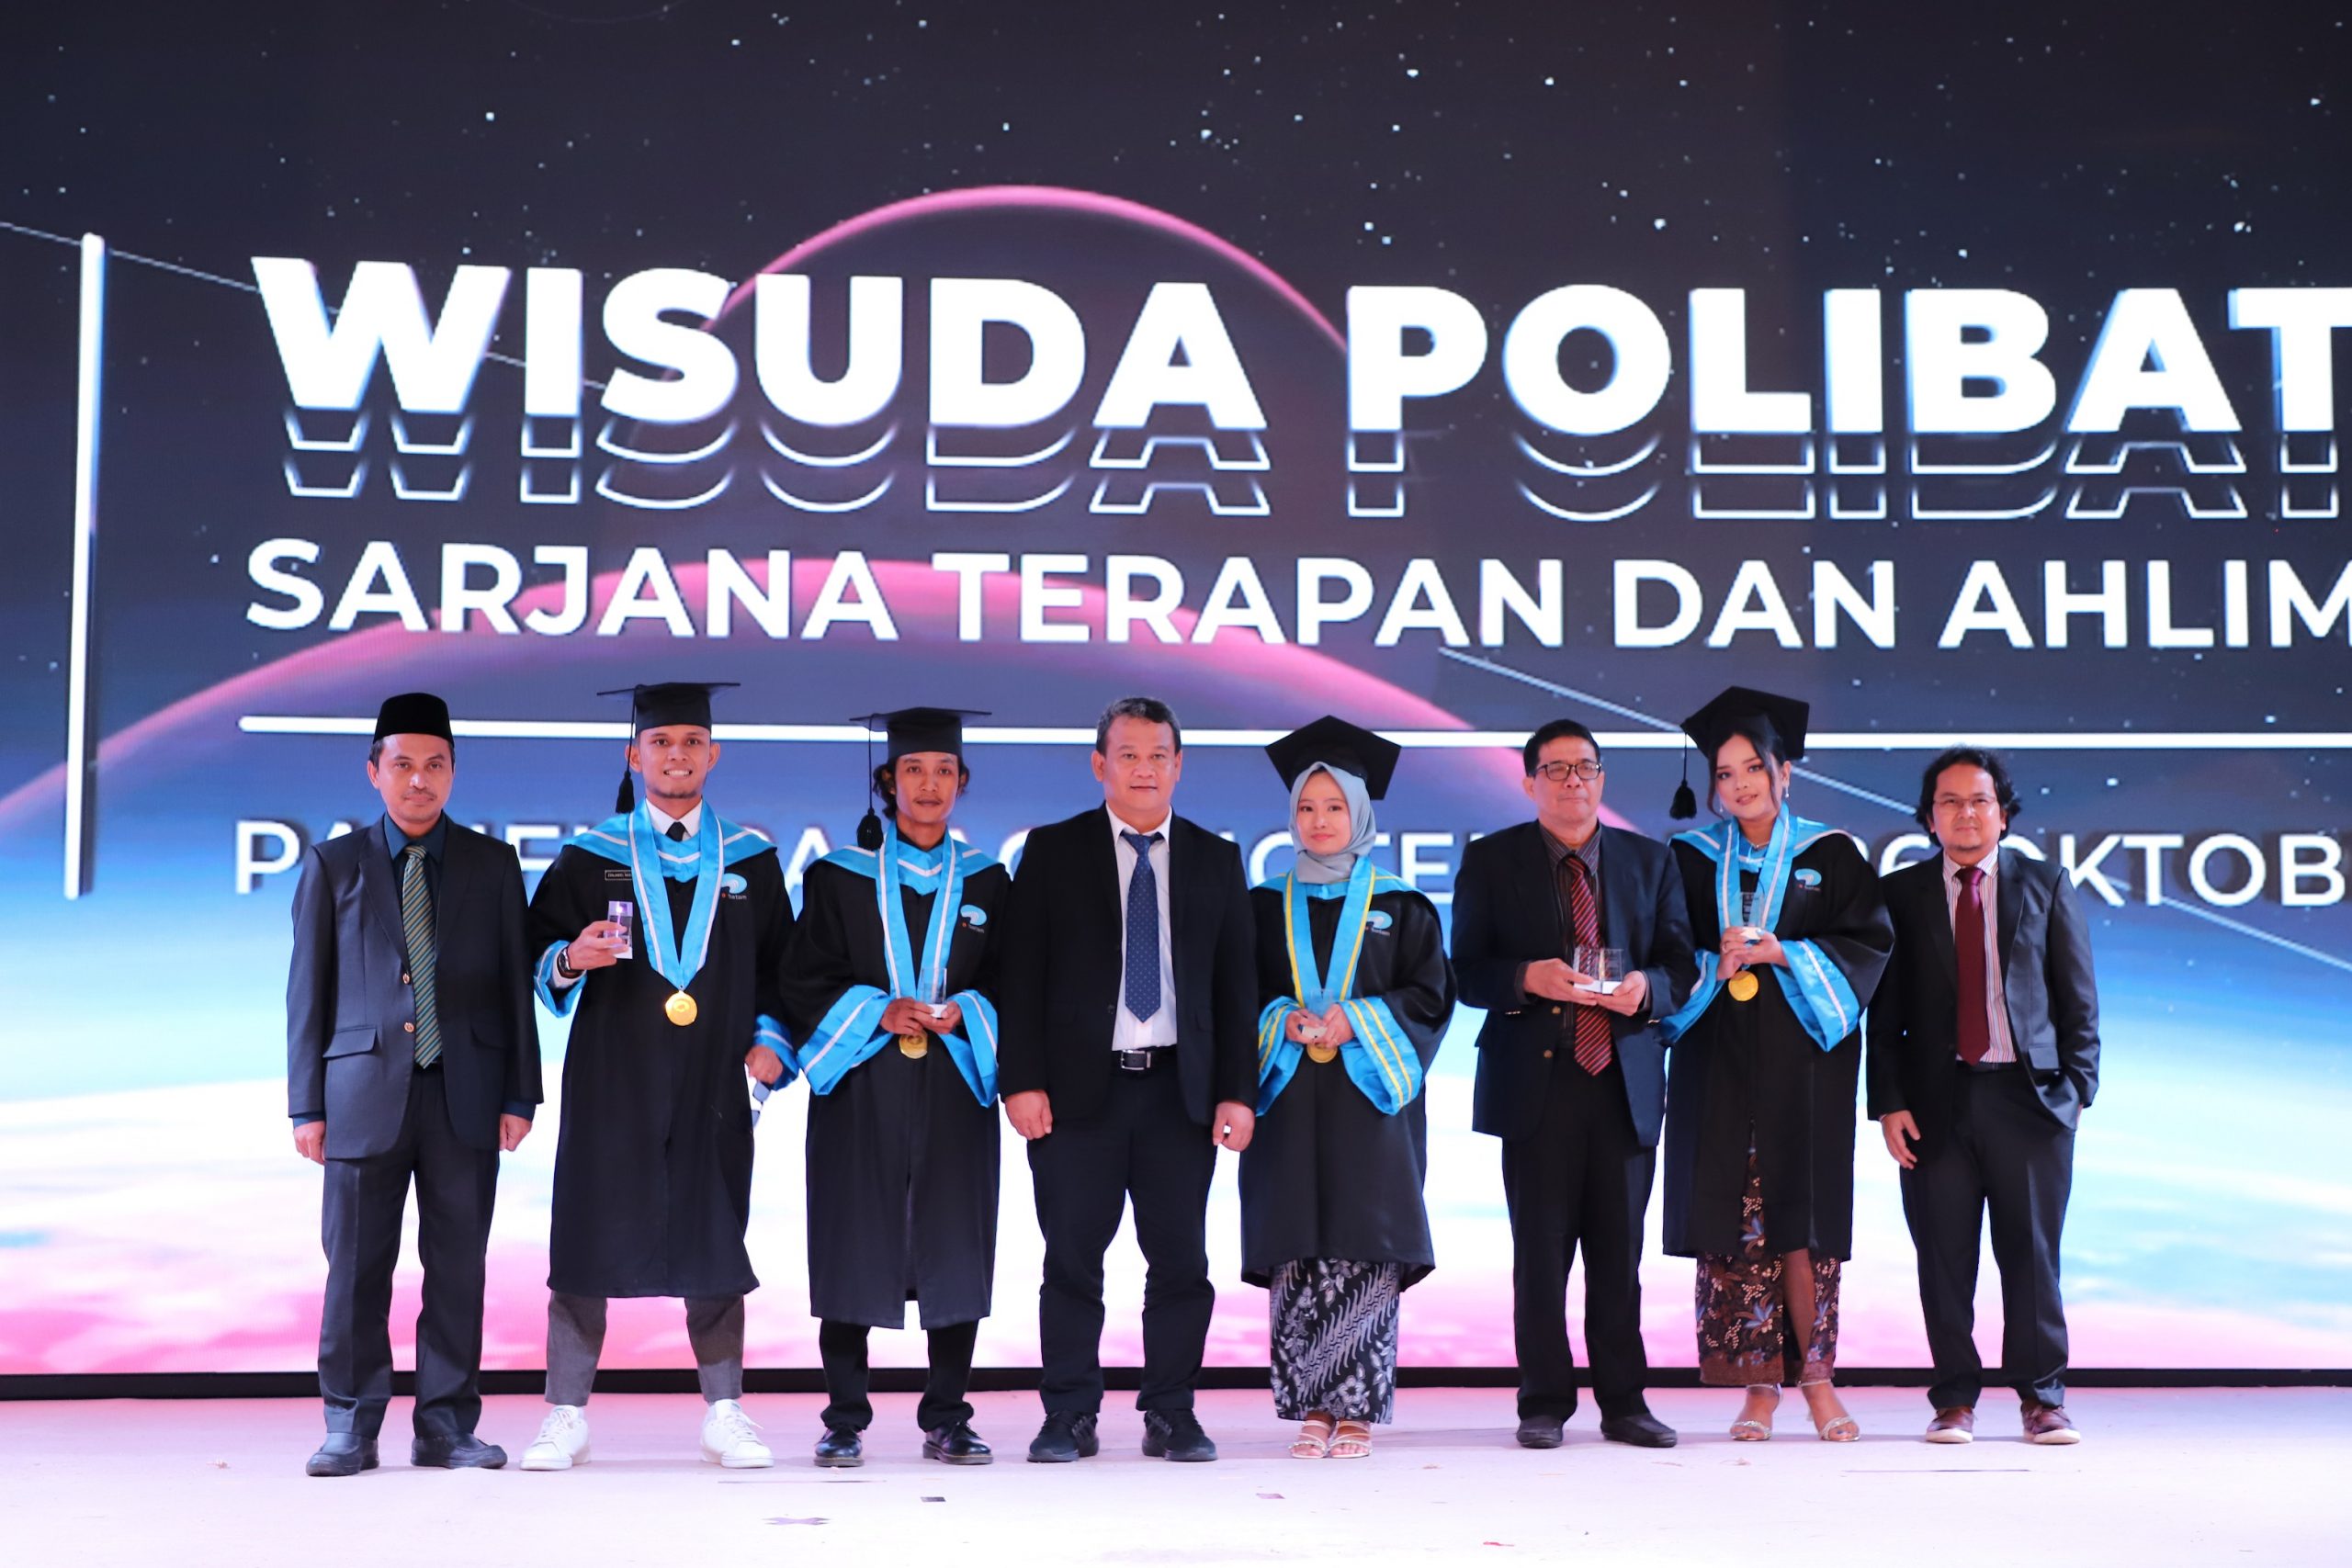 Polibatam Kukuhkan Wisudawan/ti 1263 Sarjana Terapan dan Ahli Madya dari 21 Program Studi Serta Program Studi Profesi Insinyur